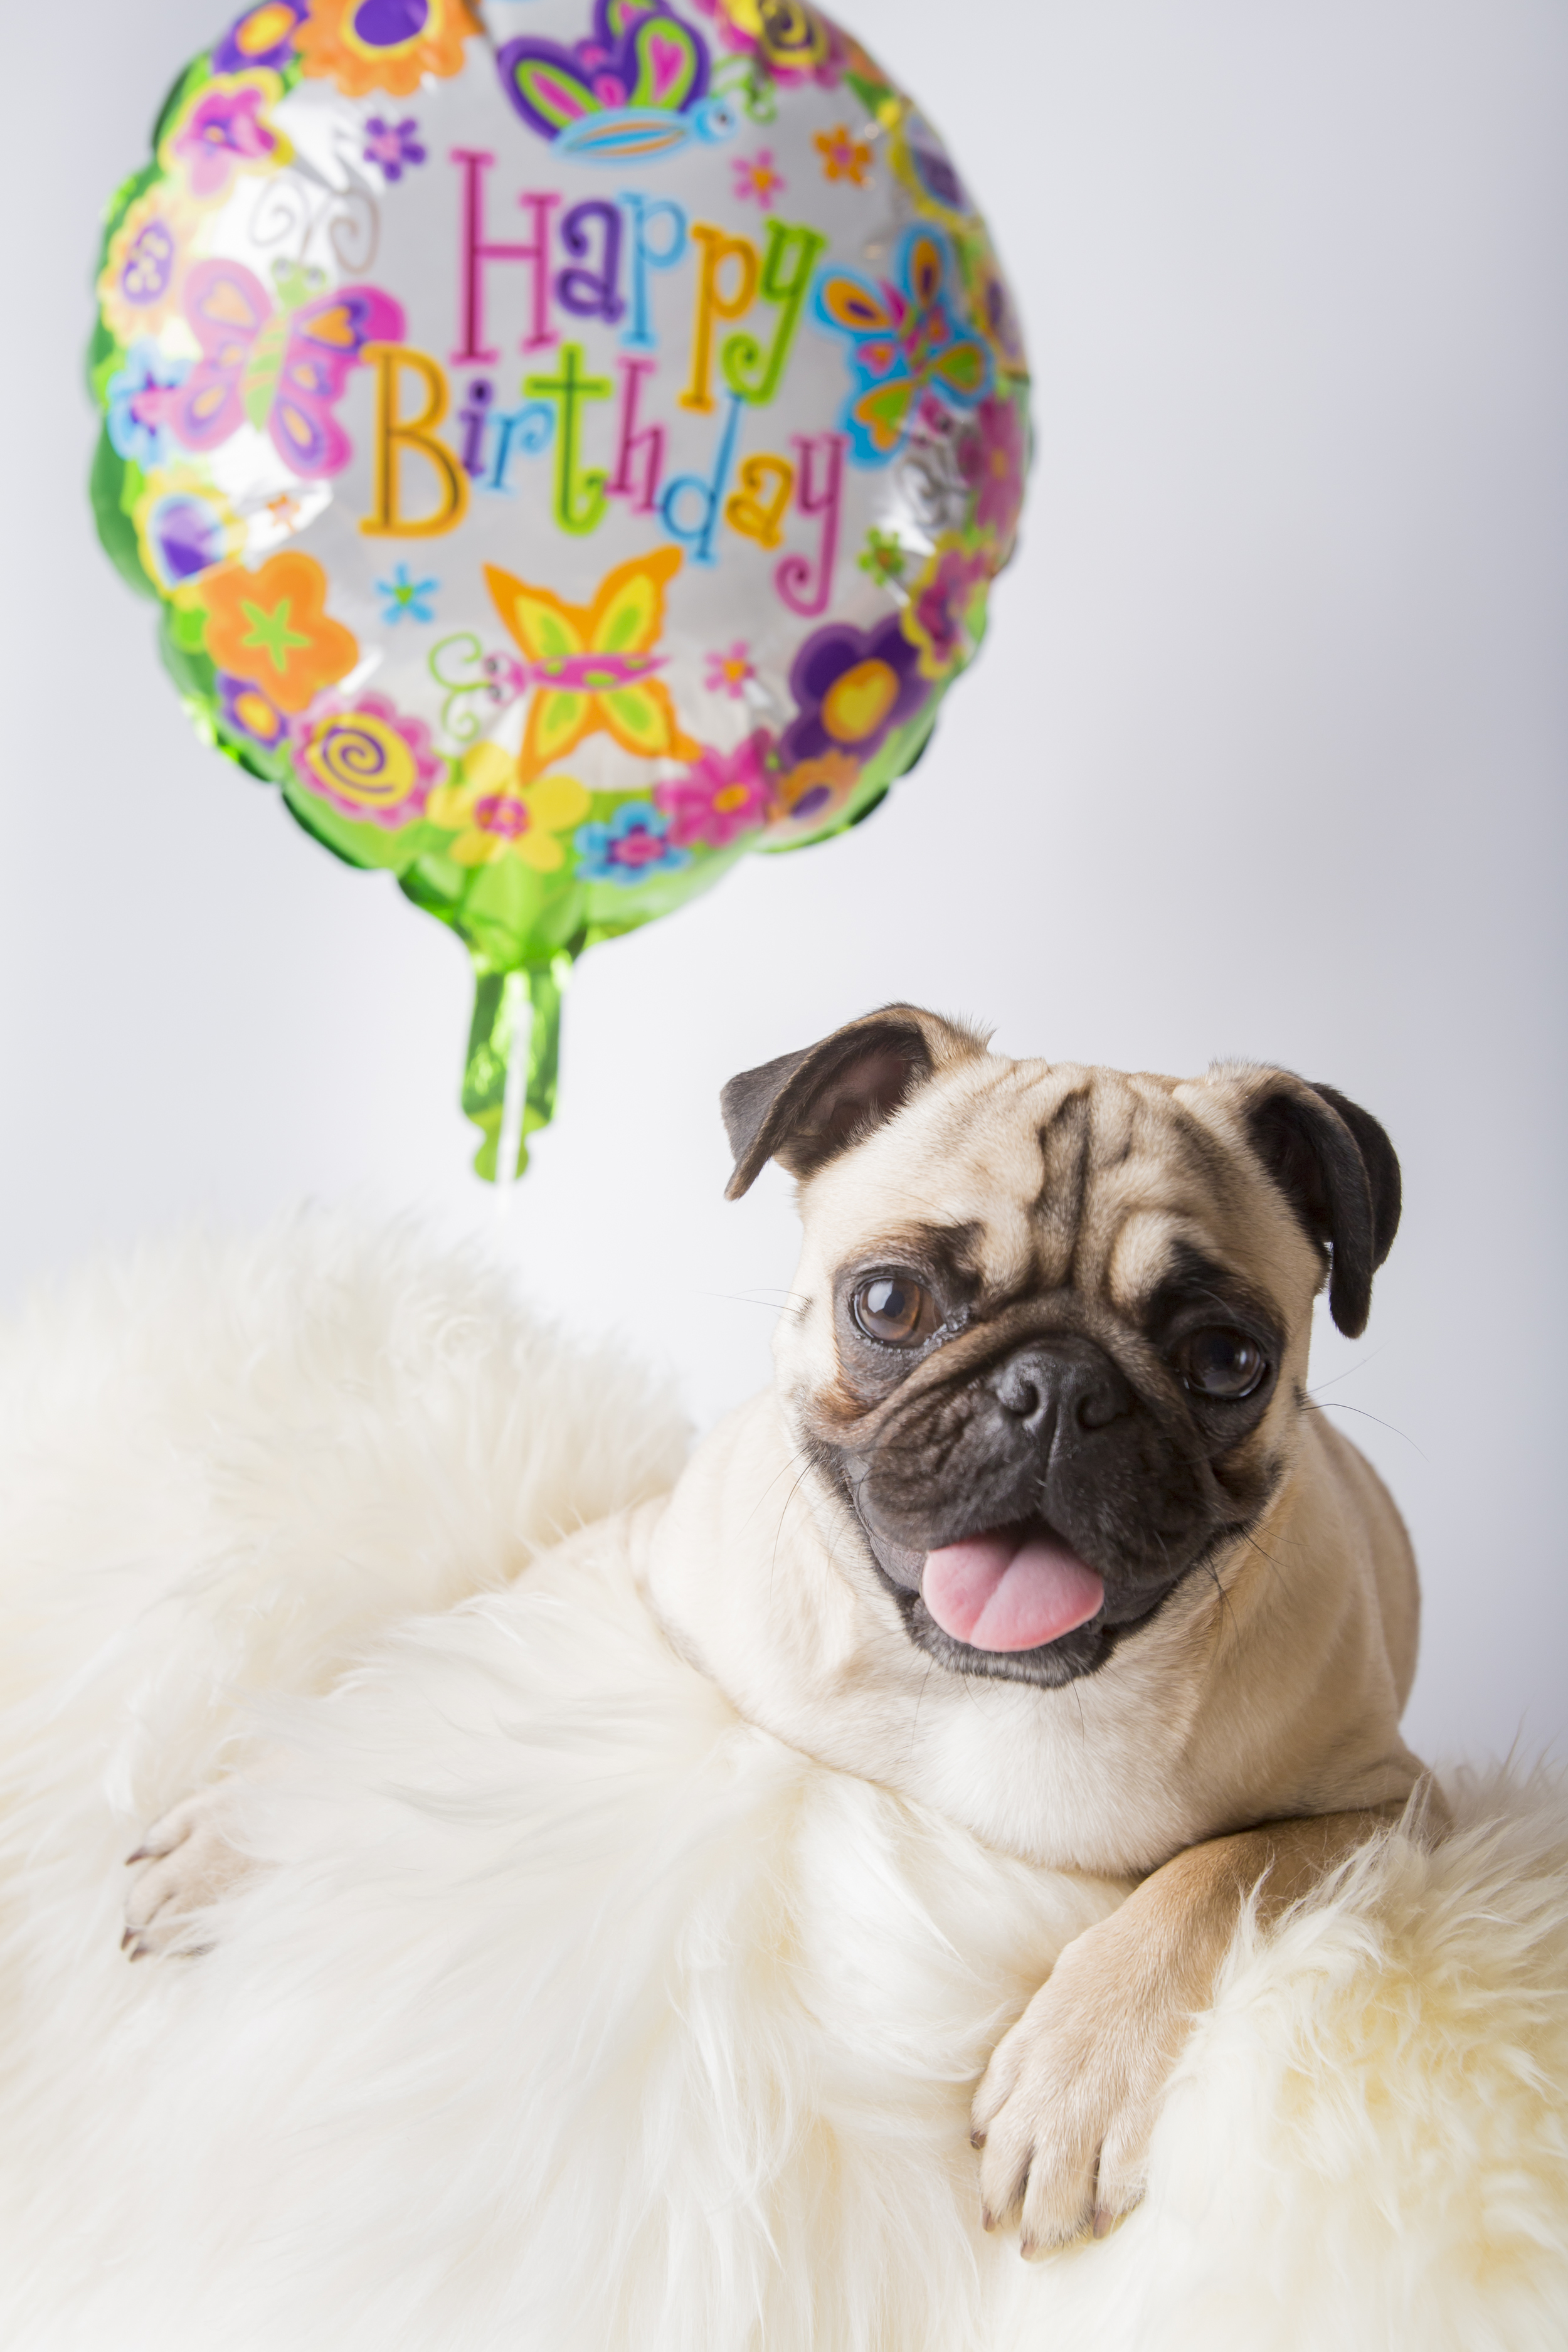 02 Pug birthday balloon pet photography studio session on white fur rug.jpg